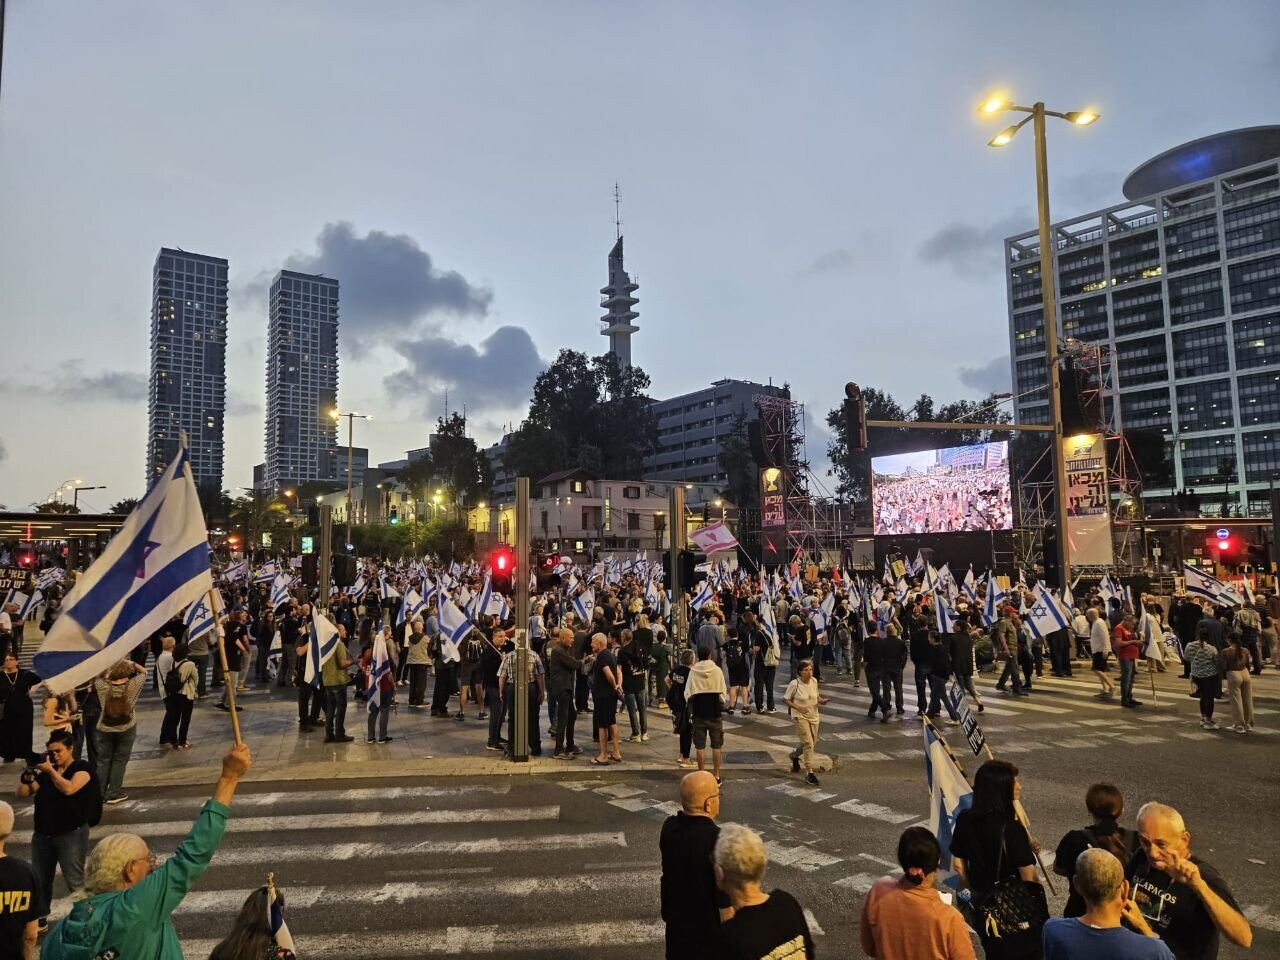 Zionist regime faces more protests, internal criticism